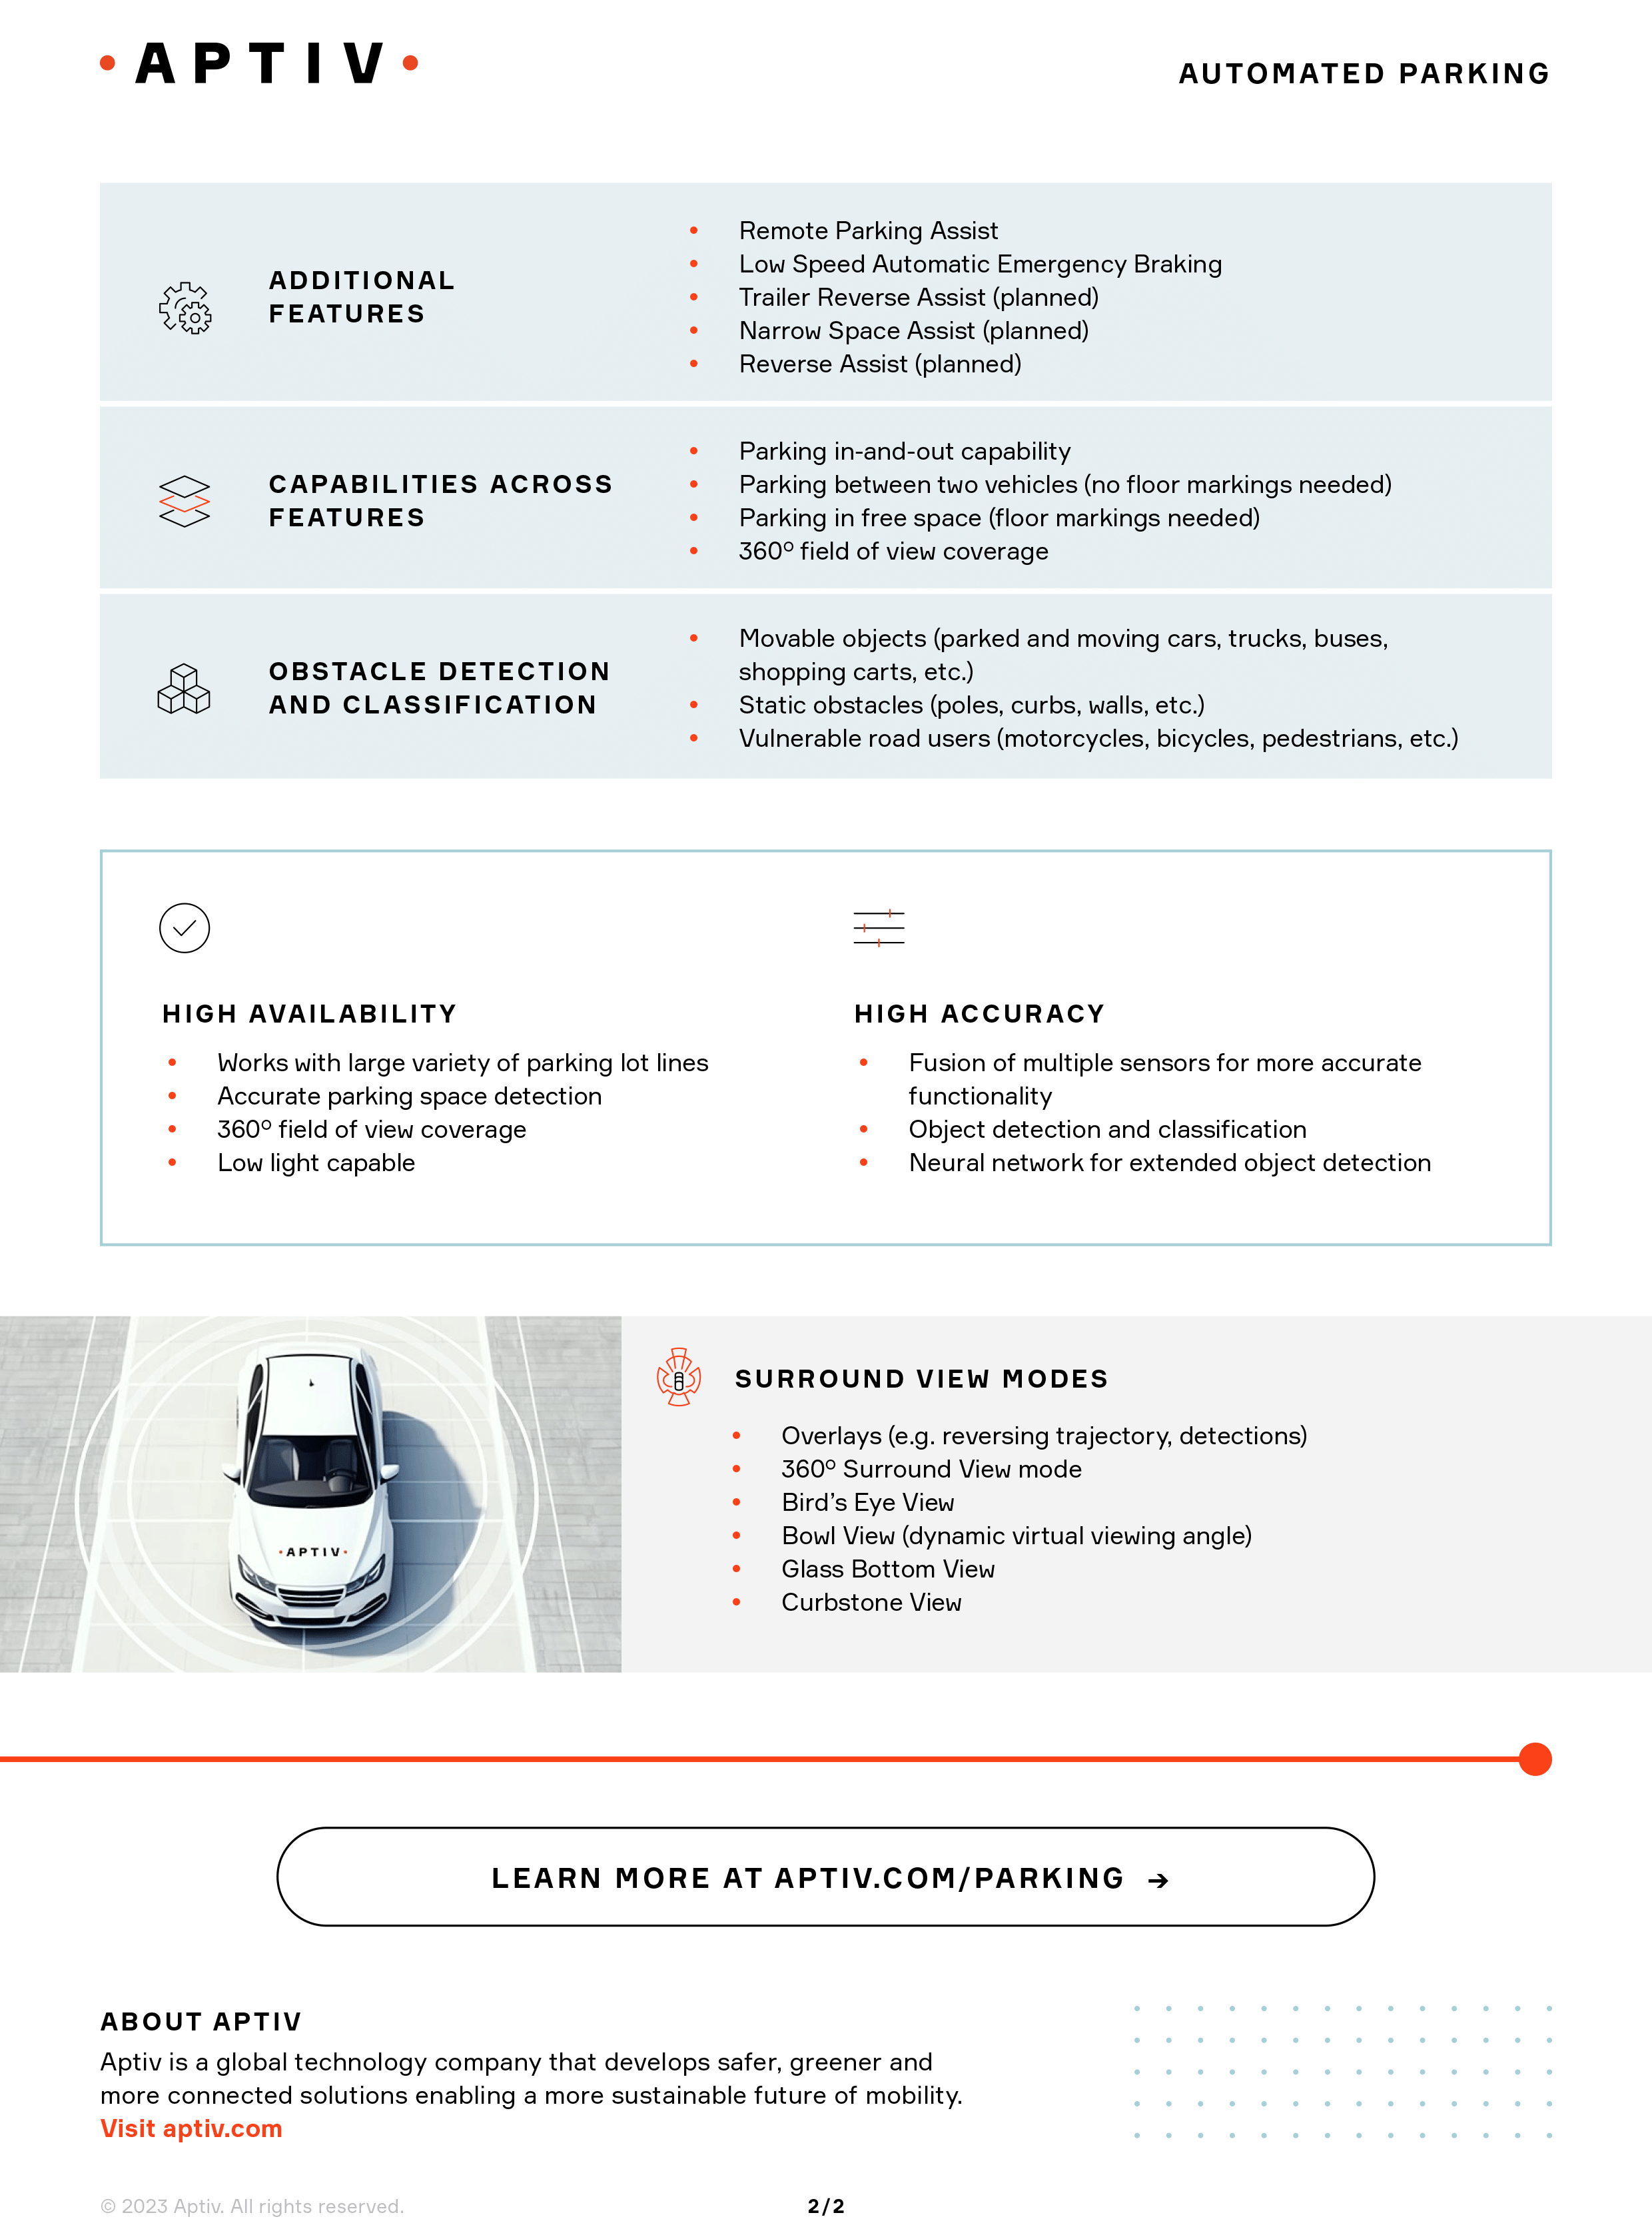 Automated Parking Data Sheet